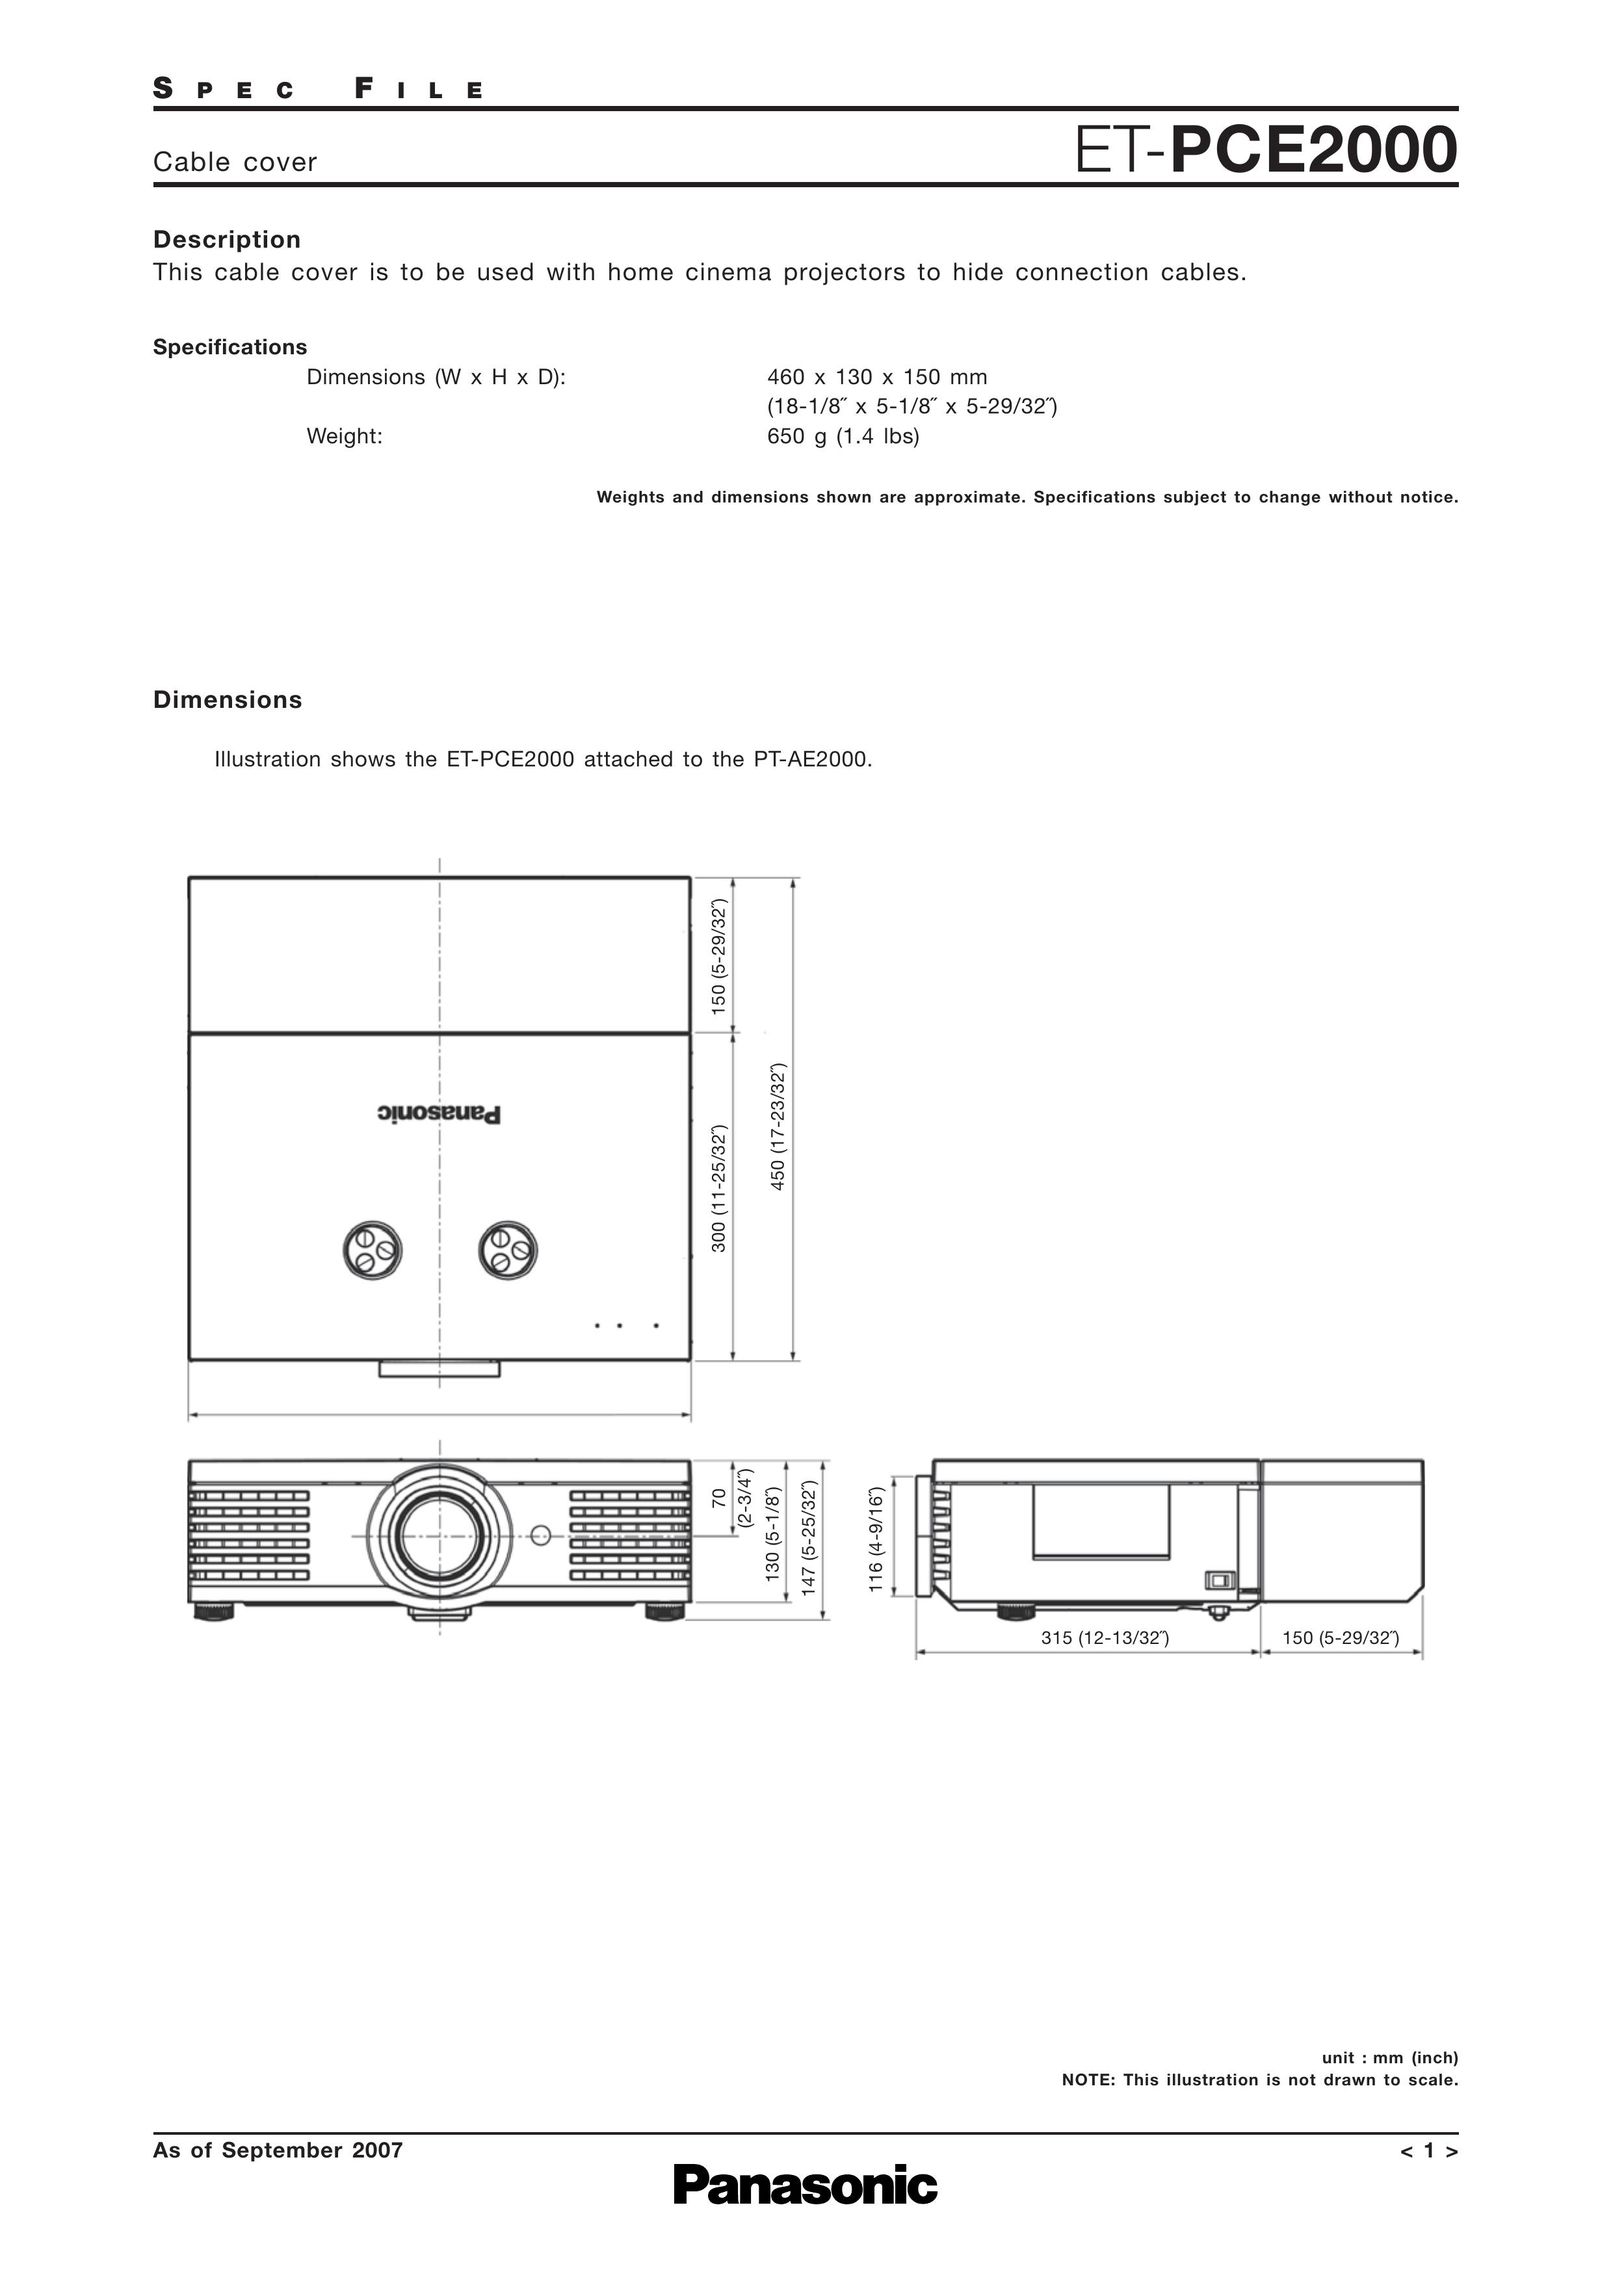 Panasonic PT-AE2000 Projector User Manual